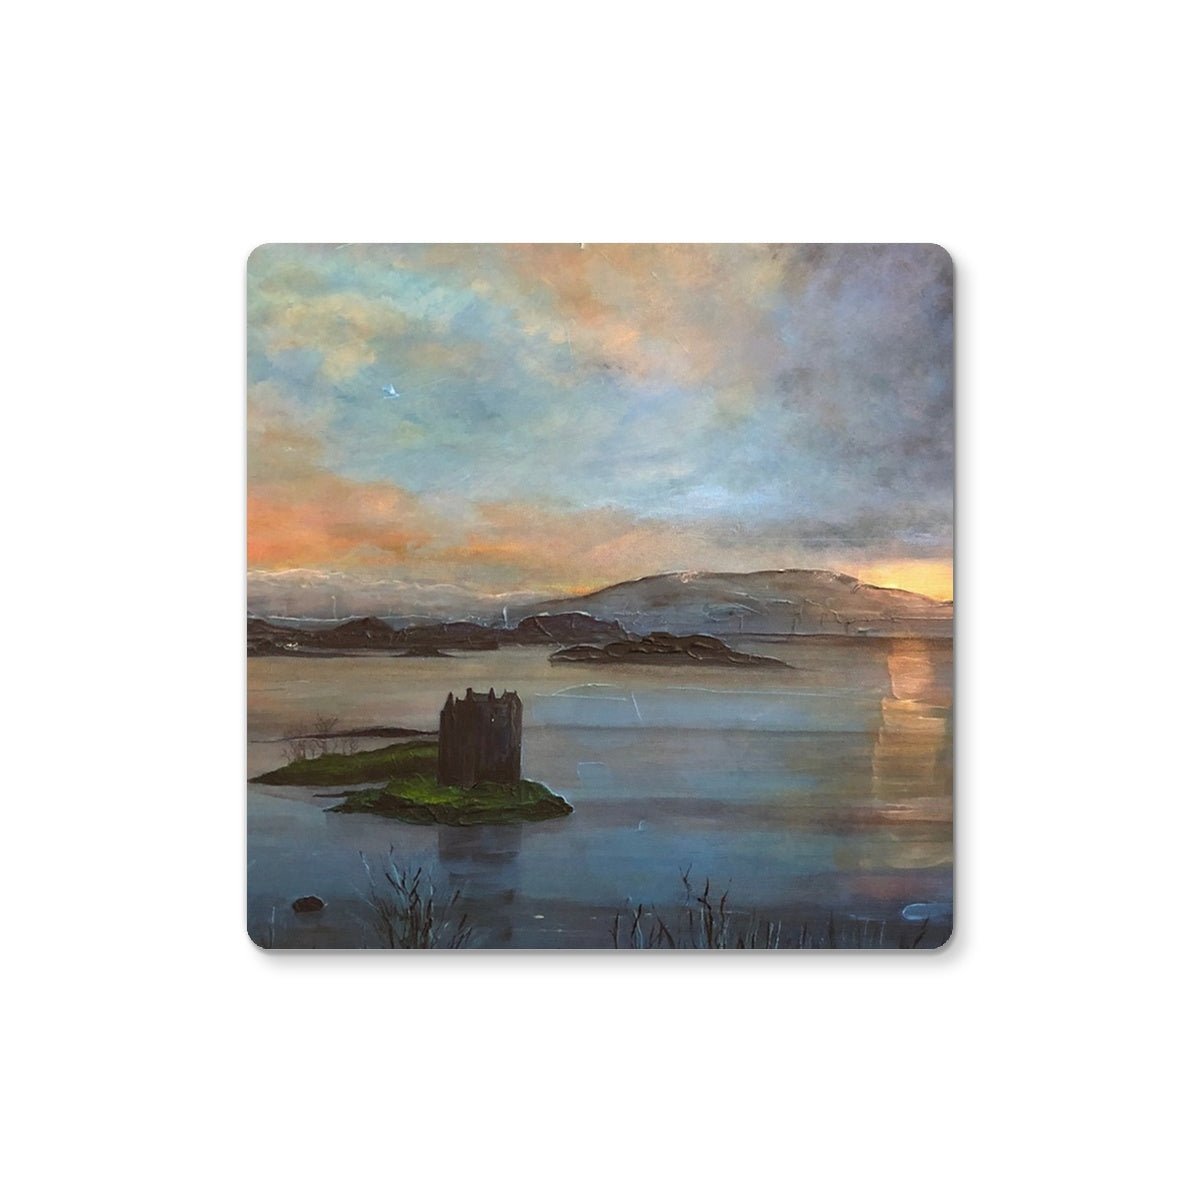 Castle Stalker Twilight Art Gift Coaster-Coasters-Scottish Castles Art Gallery-Single Coaster-Paintings, Prints, Homeware, Art Gifts From Scotland By Scottish Artist Kevin Hunter